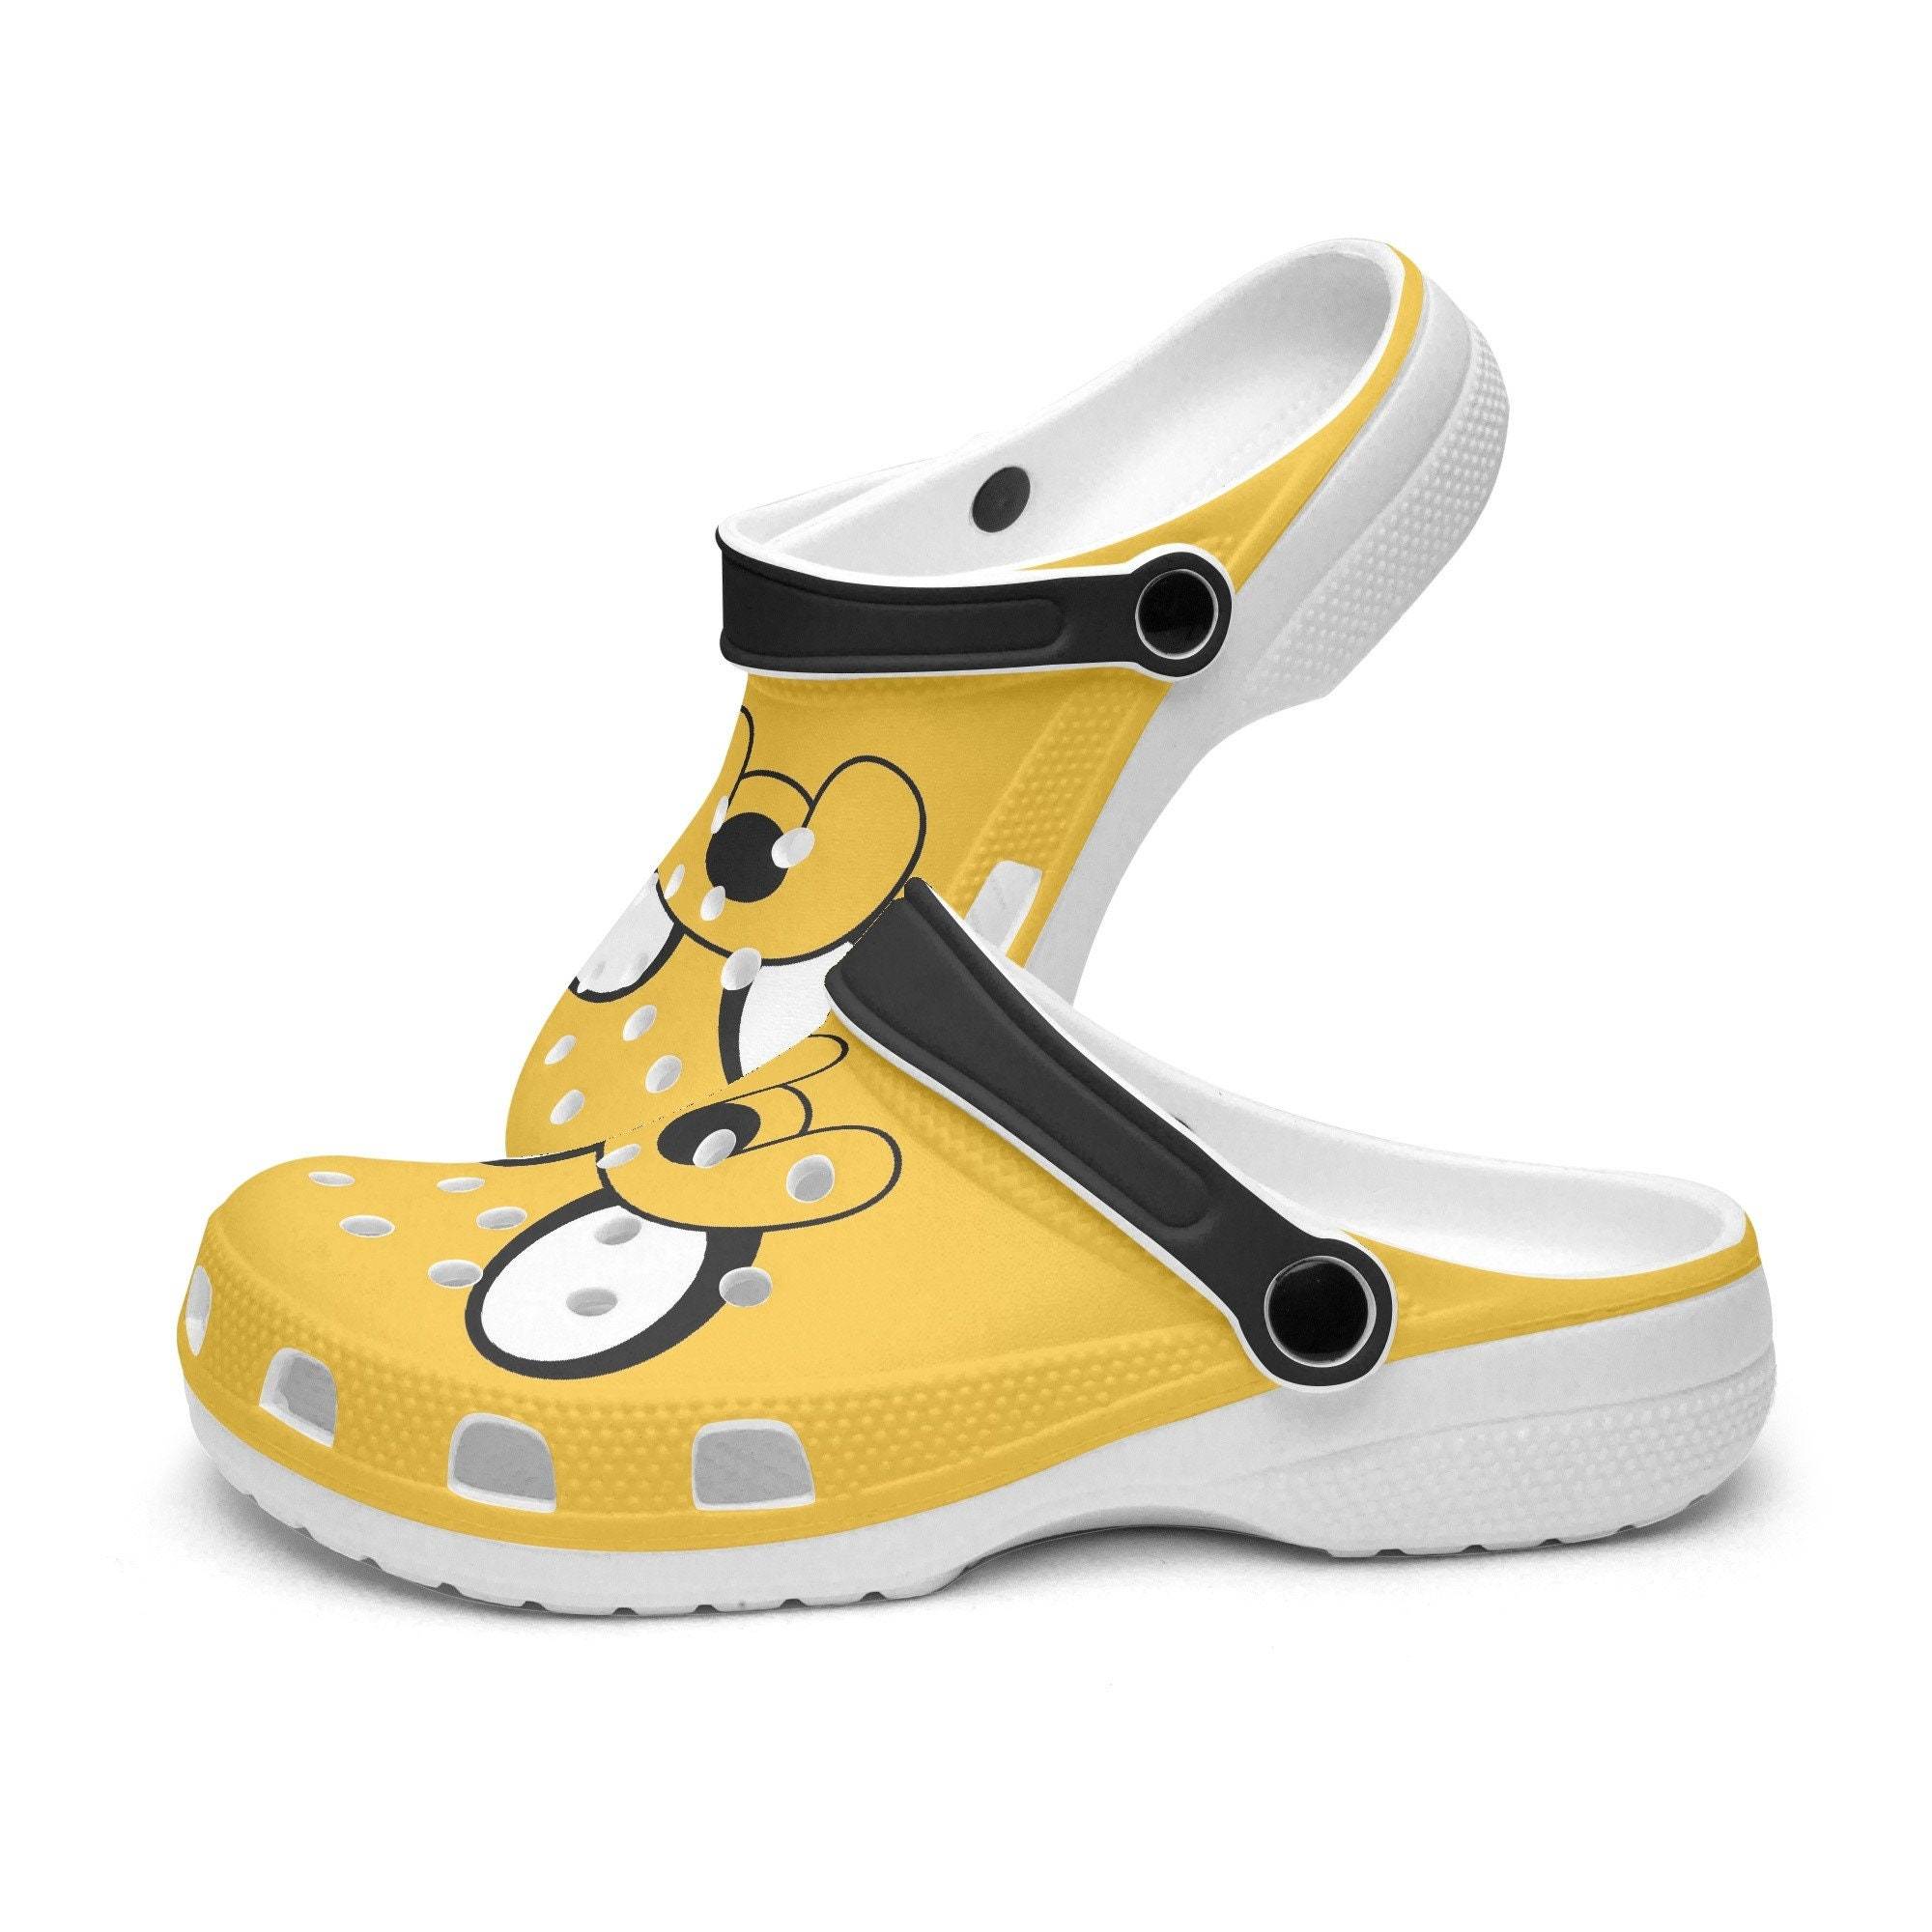 Adventure Time Clogs, Jake, Flip Flops. Birthday Gift. Custom Clogs For Men, Women And Kids